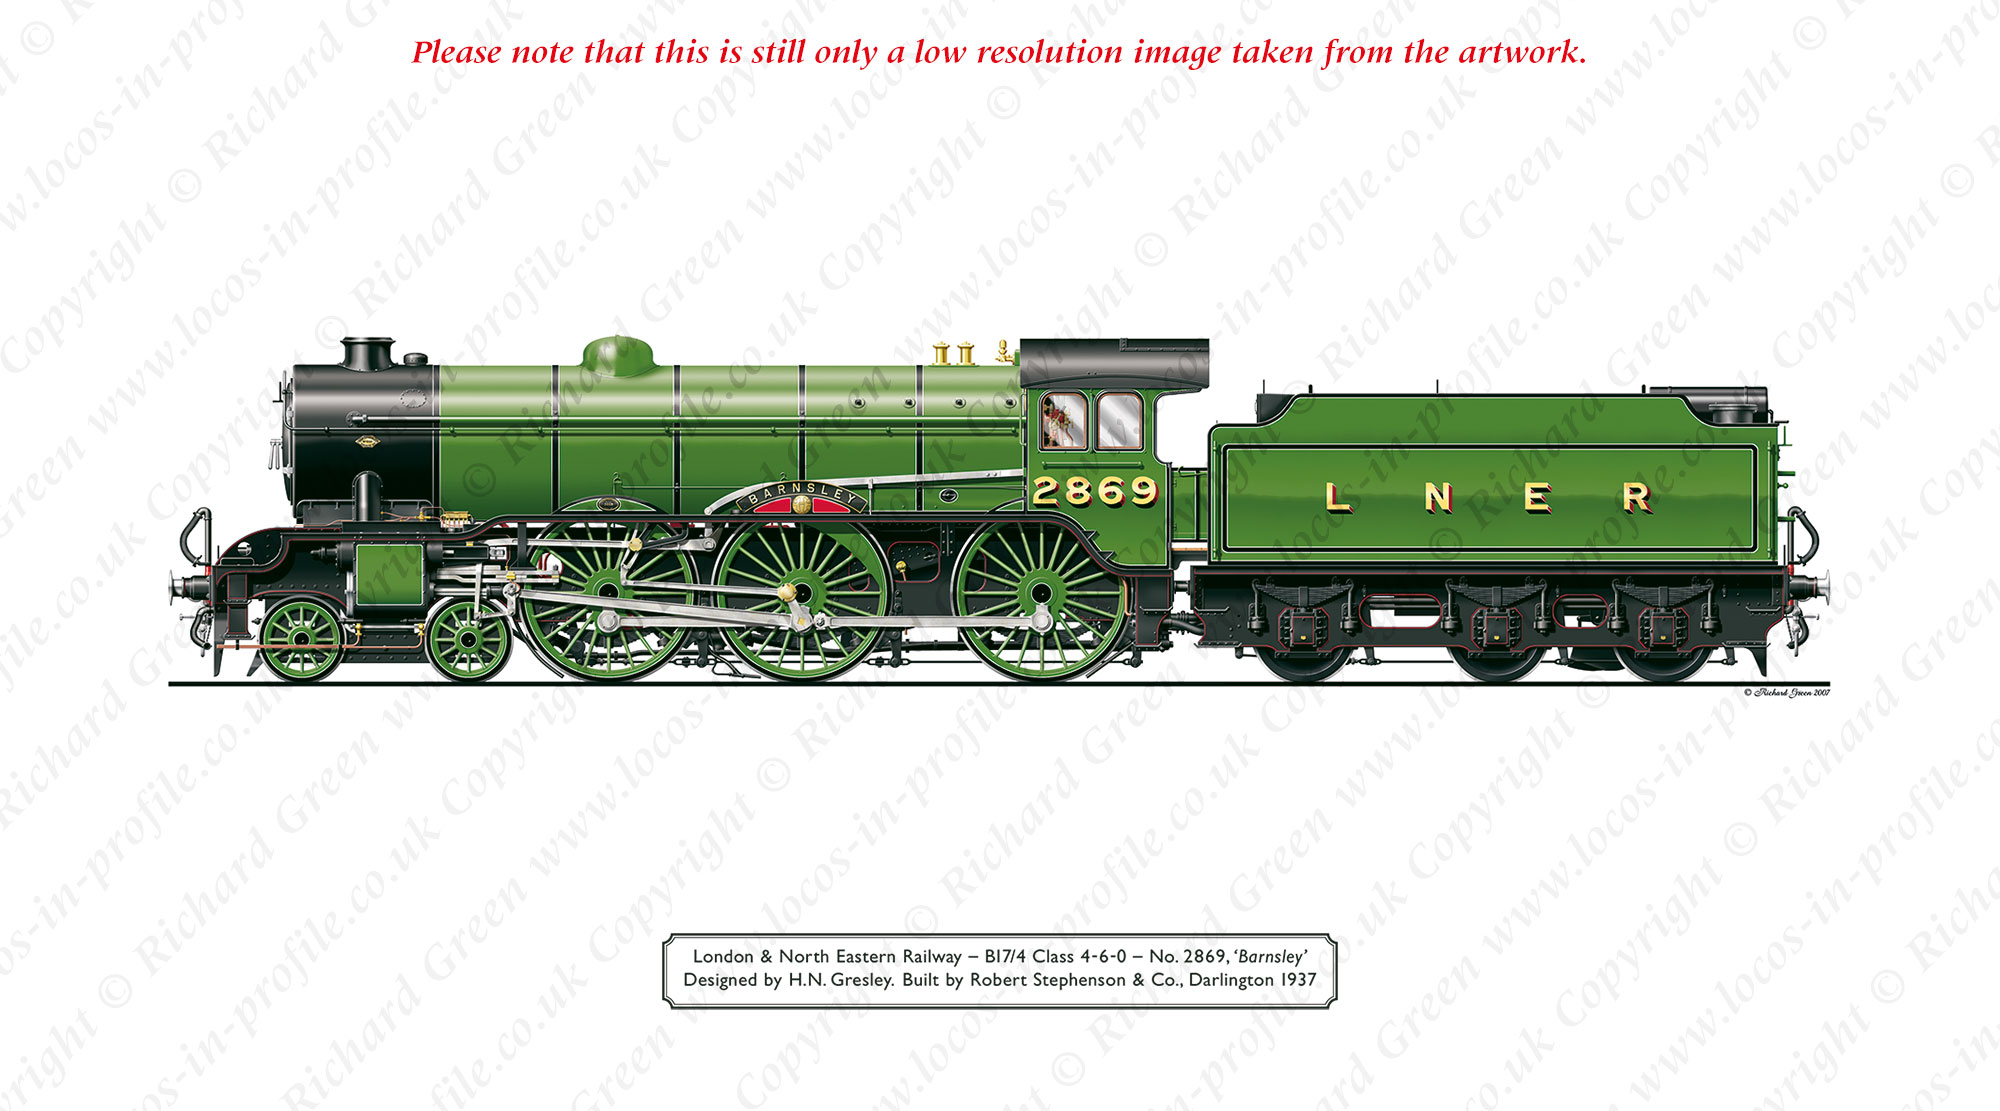 LNER B17/4 Footballer No 2869 (61669) Barnsley (H. N. Gresley) Steam Locomotive Print